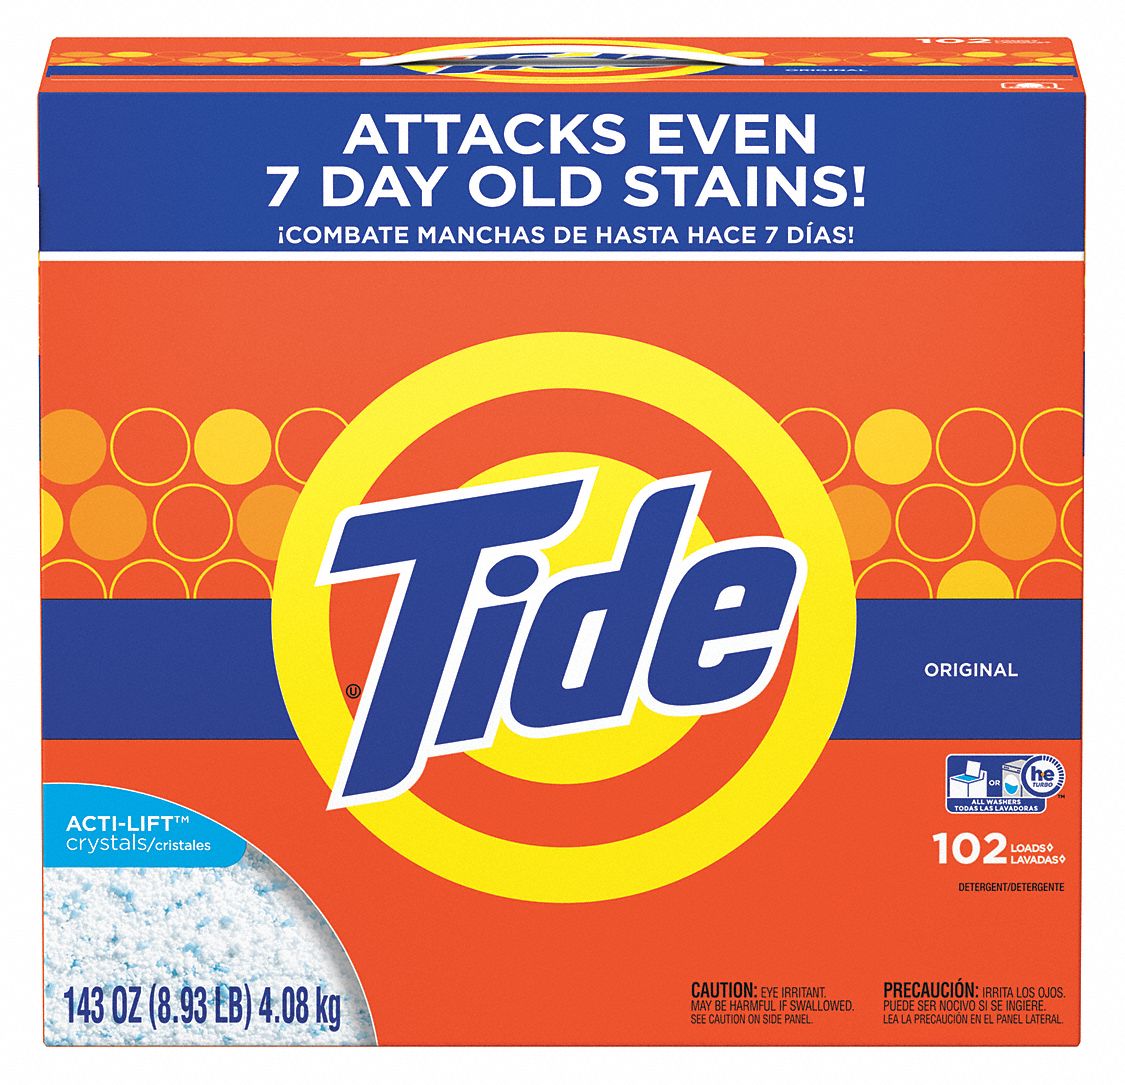 Laundry Detergent: High Efficiency (HE), Box, 8.9 lb, Powder, Original, 2 PK